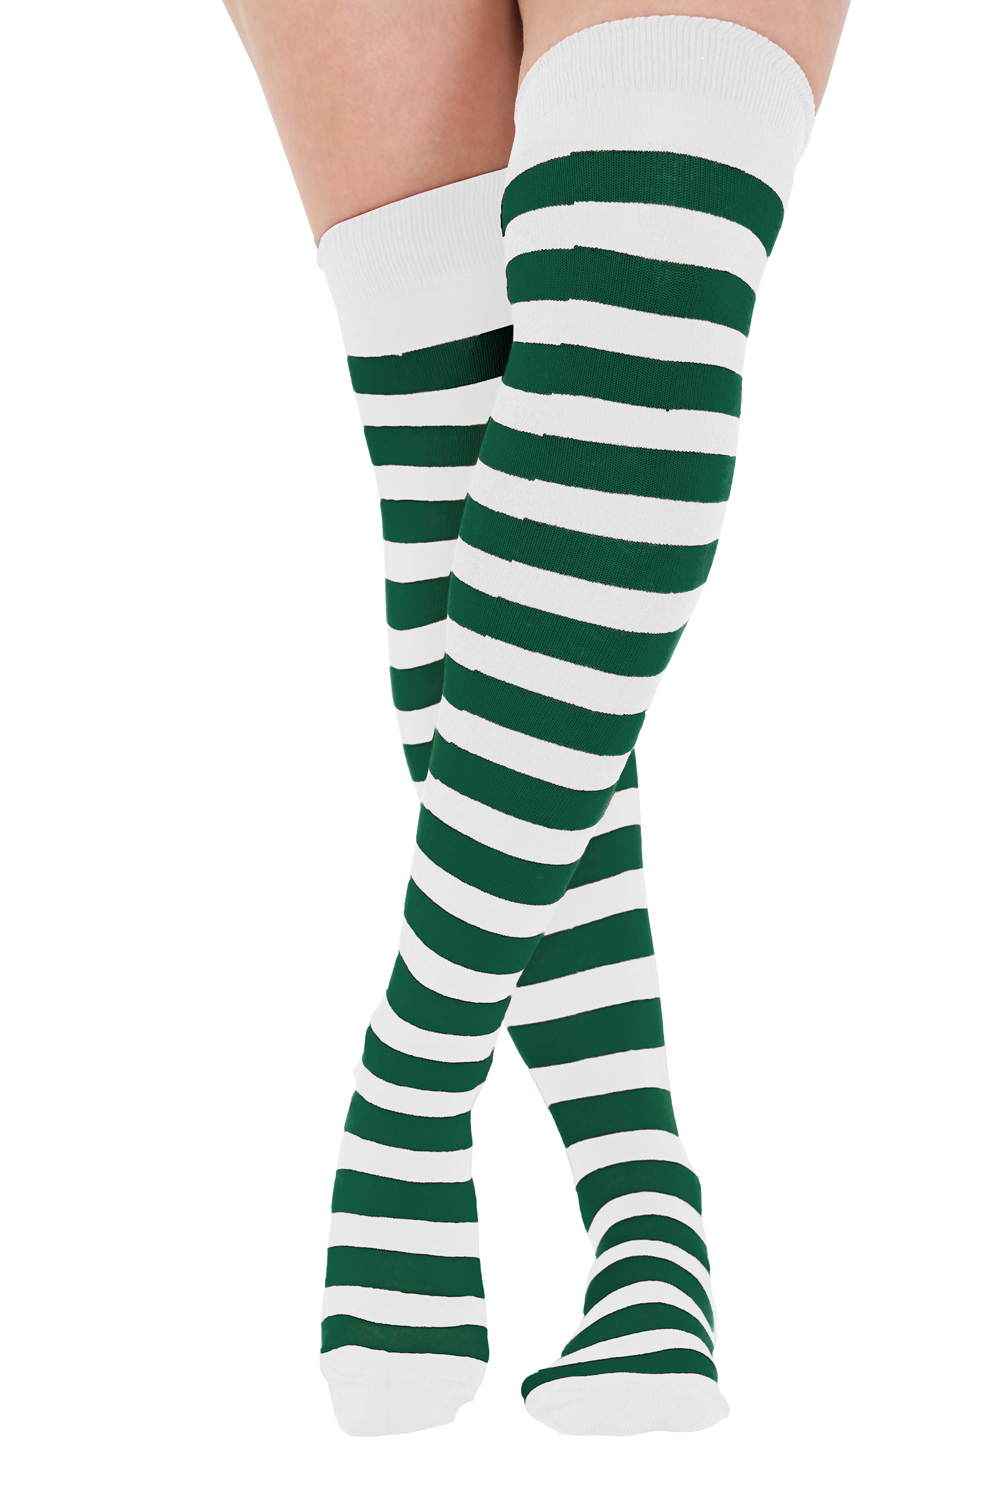 Crazy Chick Green White OTK Stripe Socks (12 Pairs)